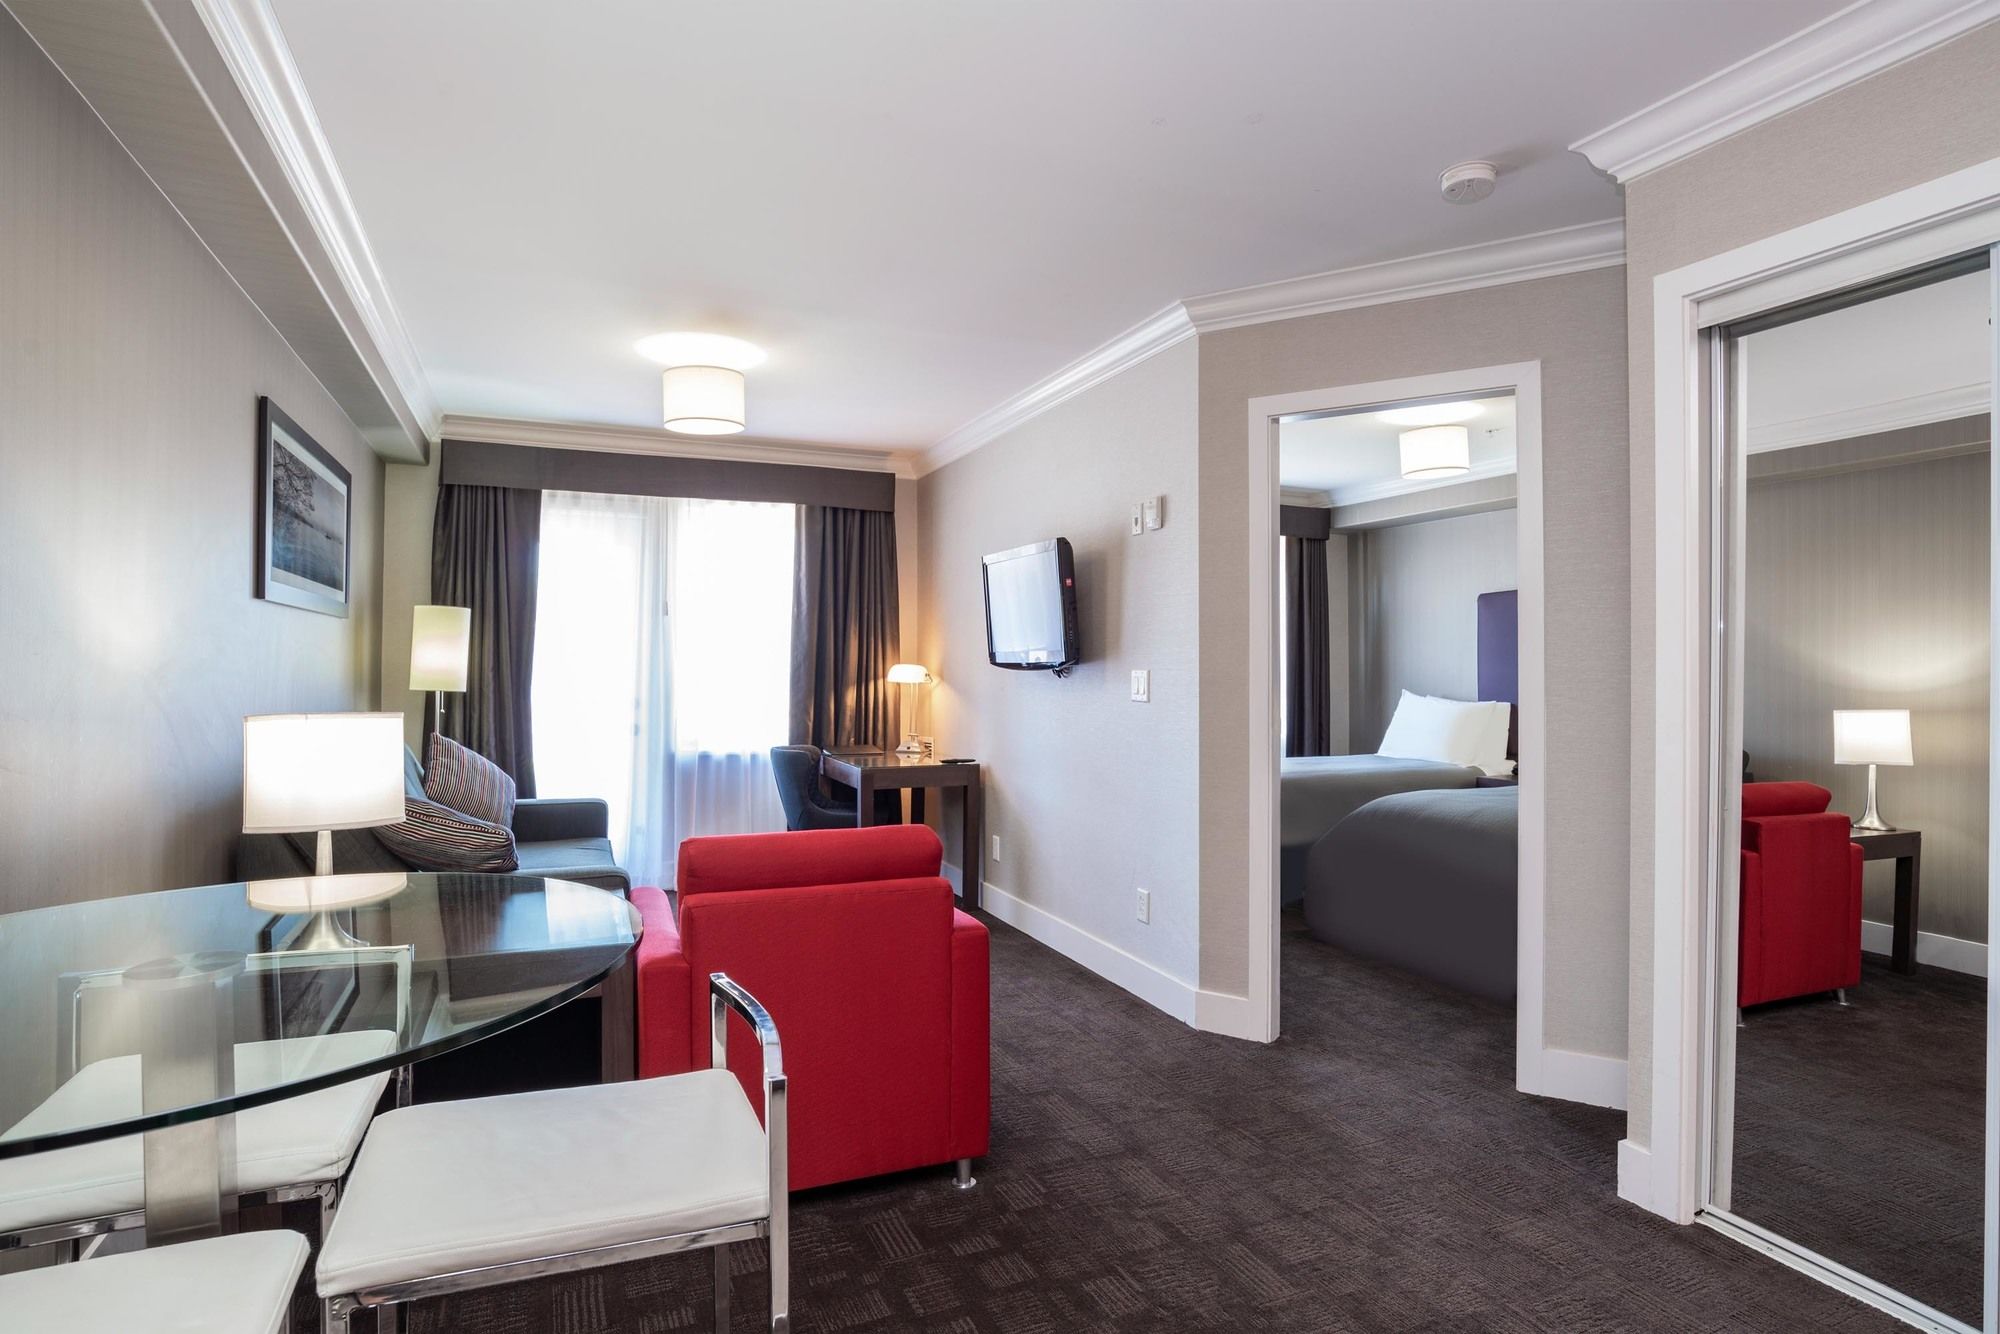 Sandman Hotel & Suites Abbotsford